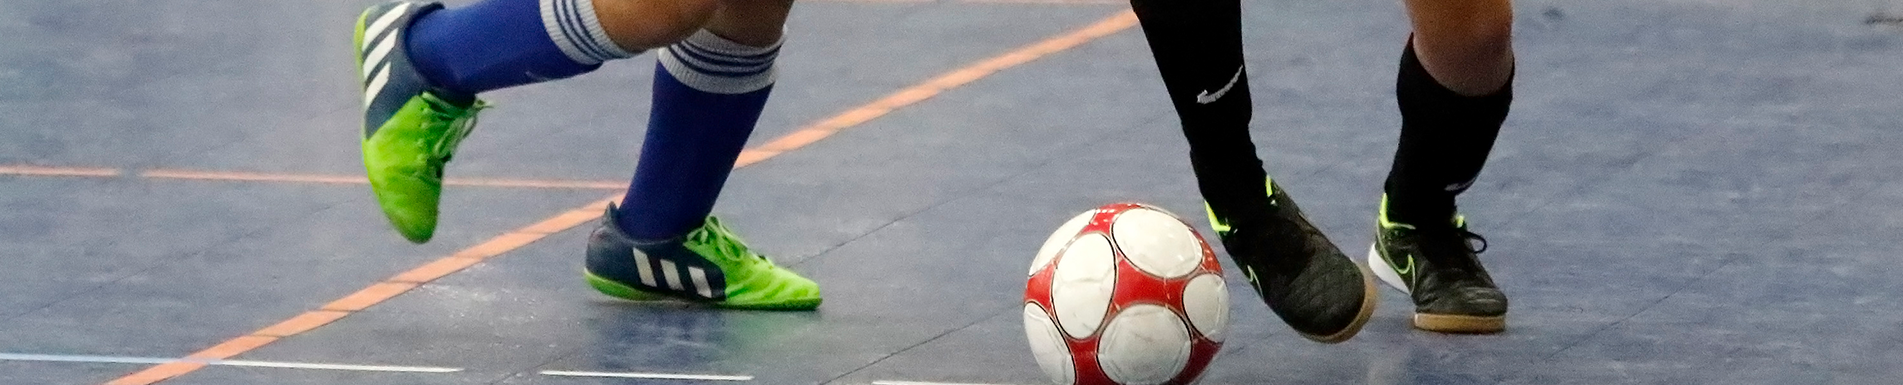 https://2956241.fs1.hubspotusercontent-na1.net/hubfs/2956241/Futsal-1.png background-image